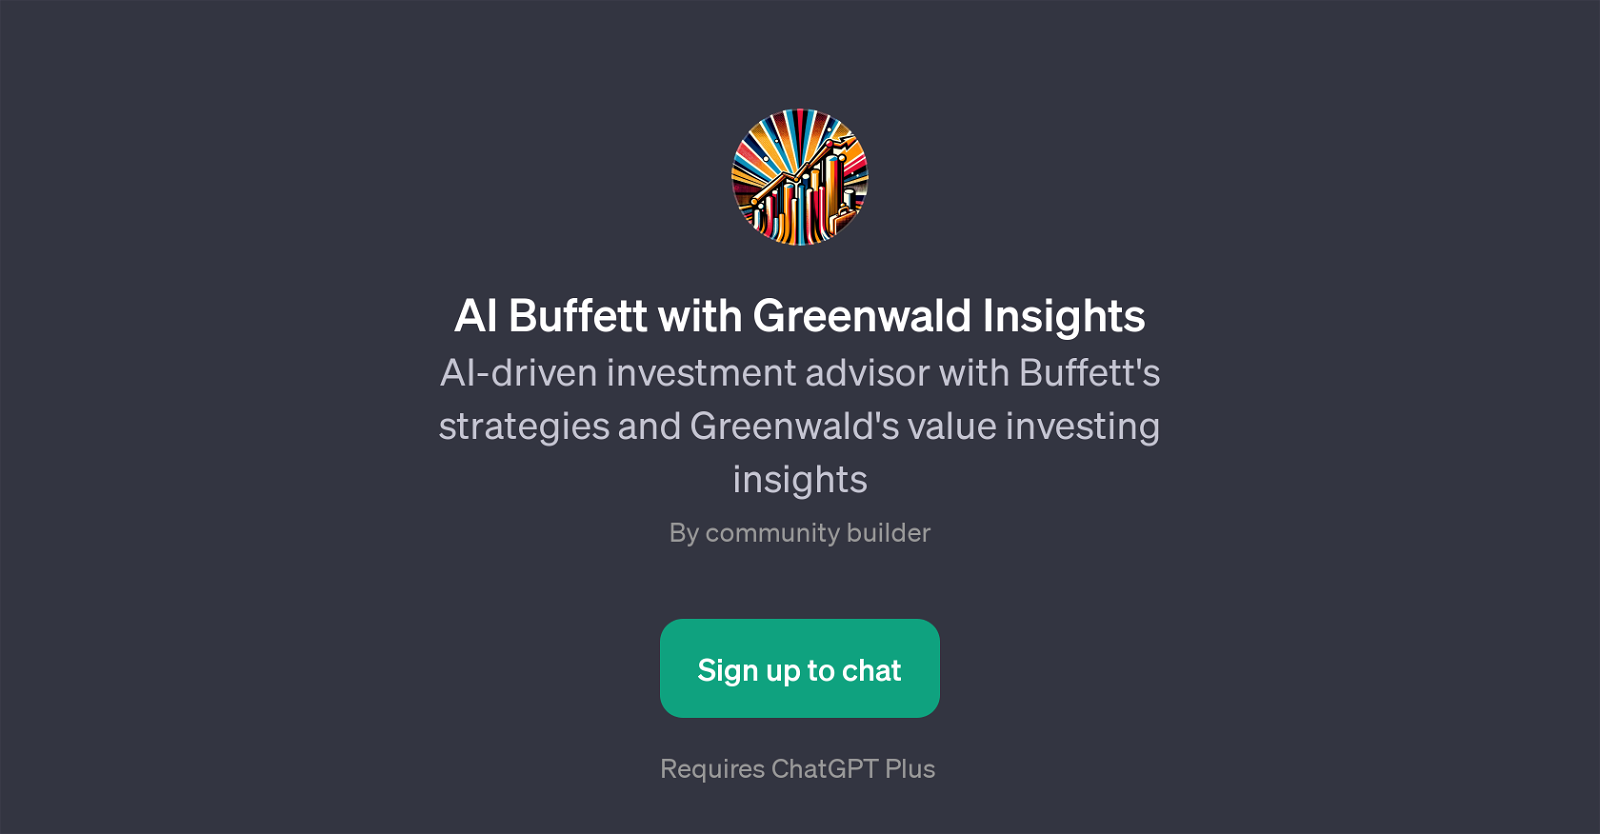 AI Buffett with Greenwald Insights website